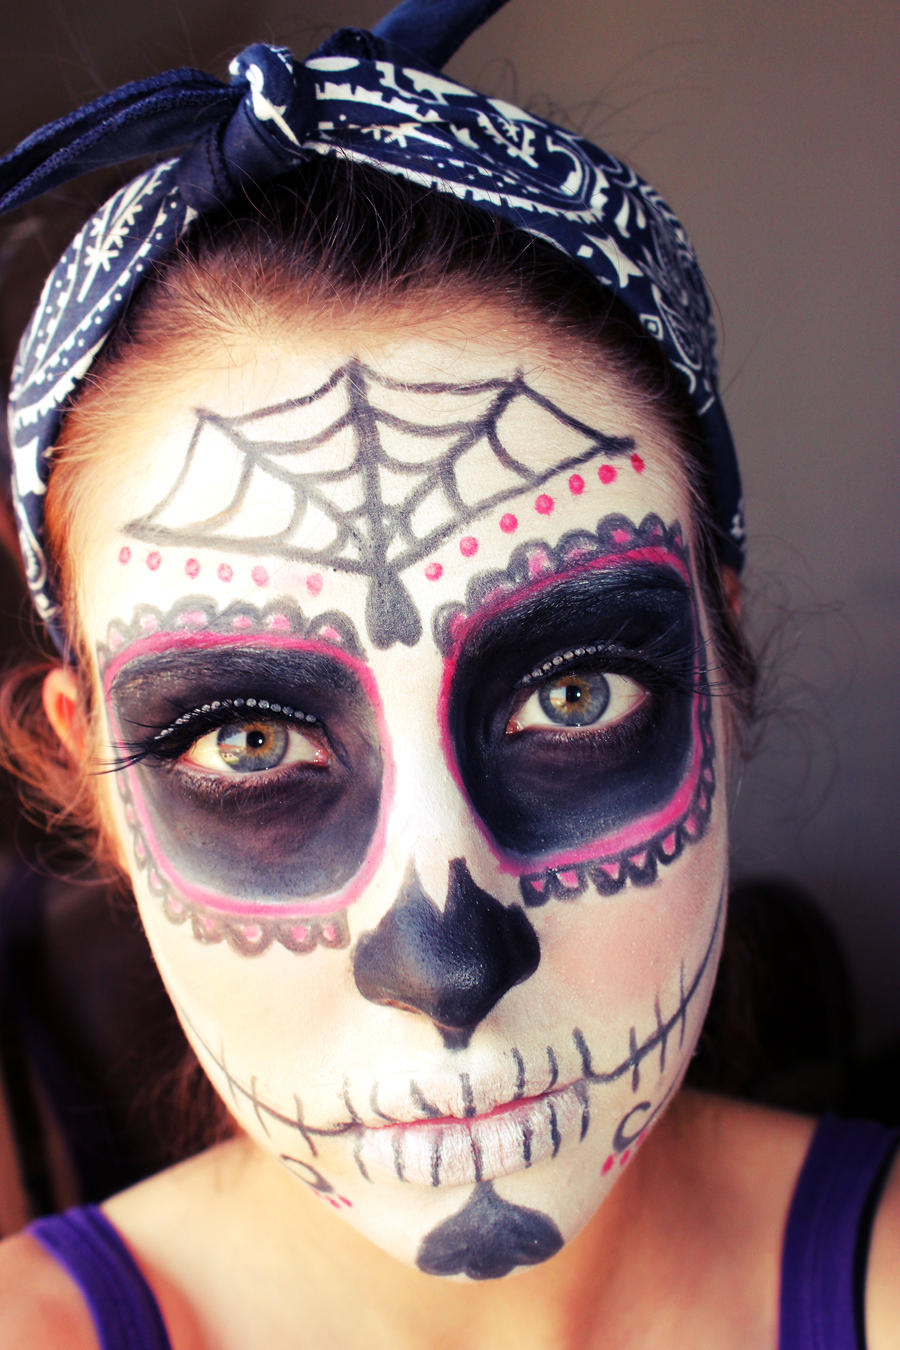 Candy Skull Makeup by ScarletWarmness on DeviantArt